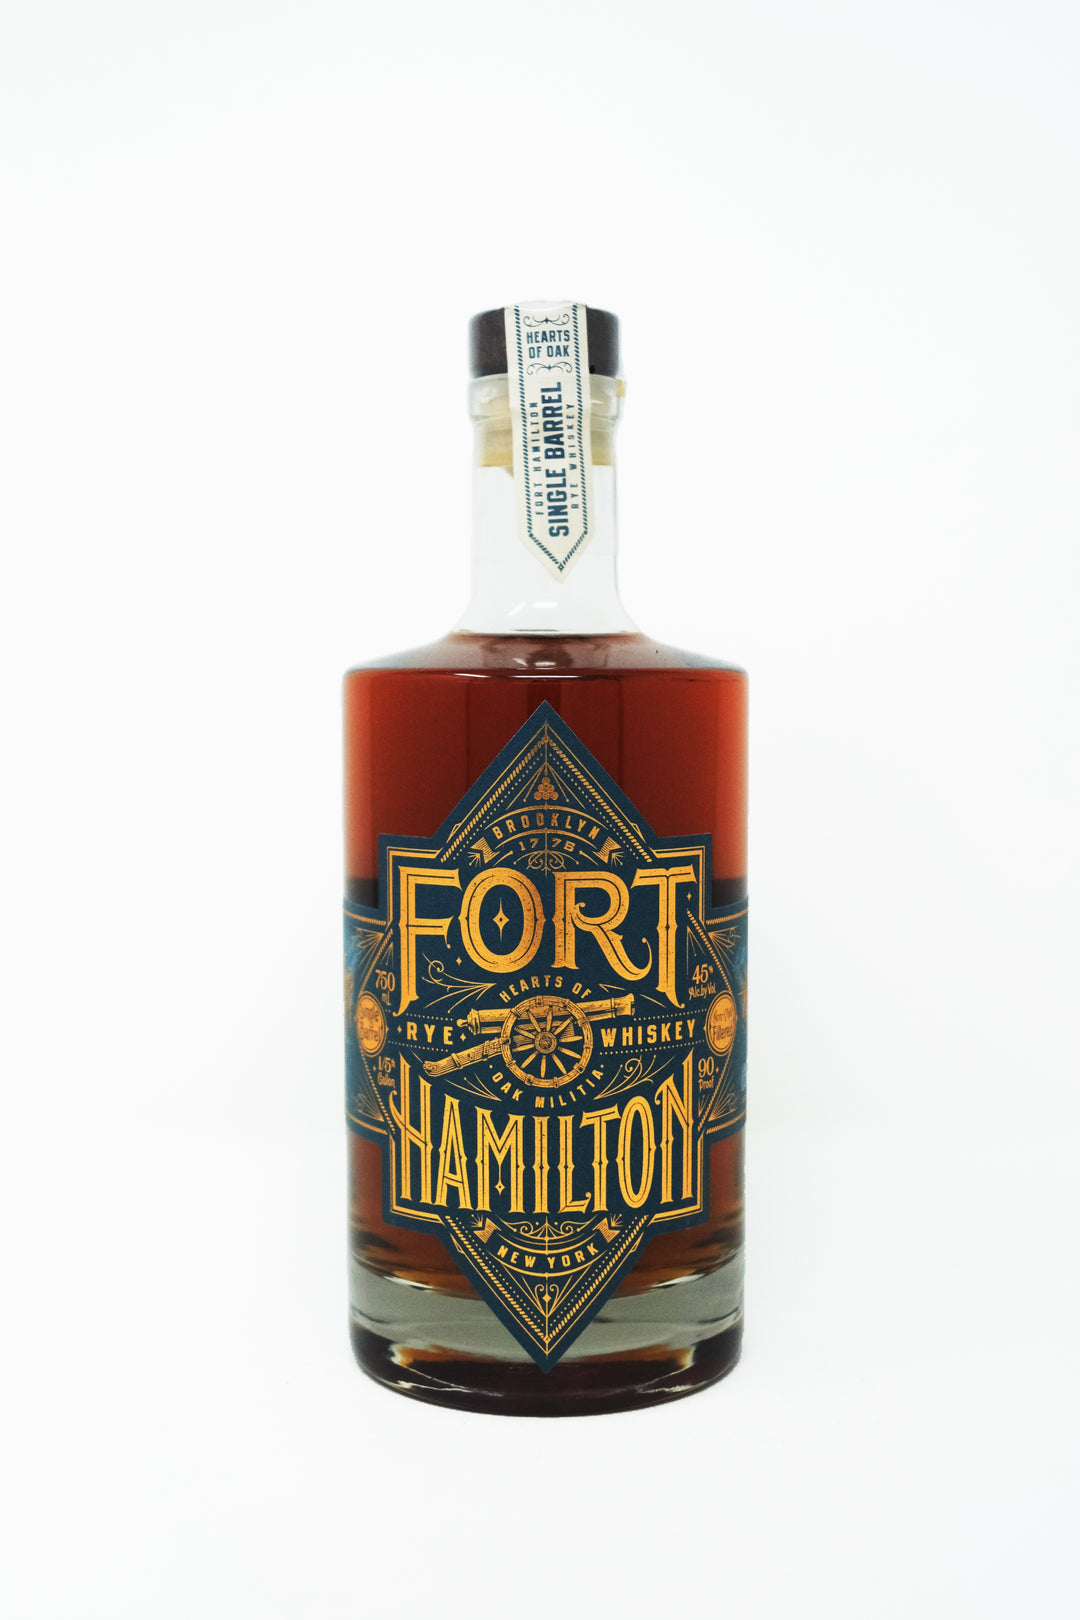 Fort Hamilton Single Barrel Rye